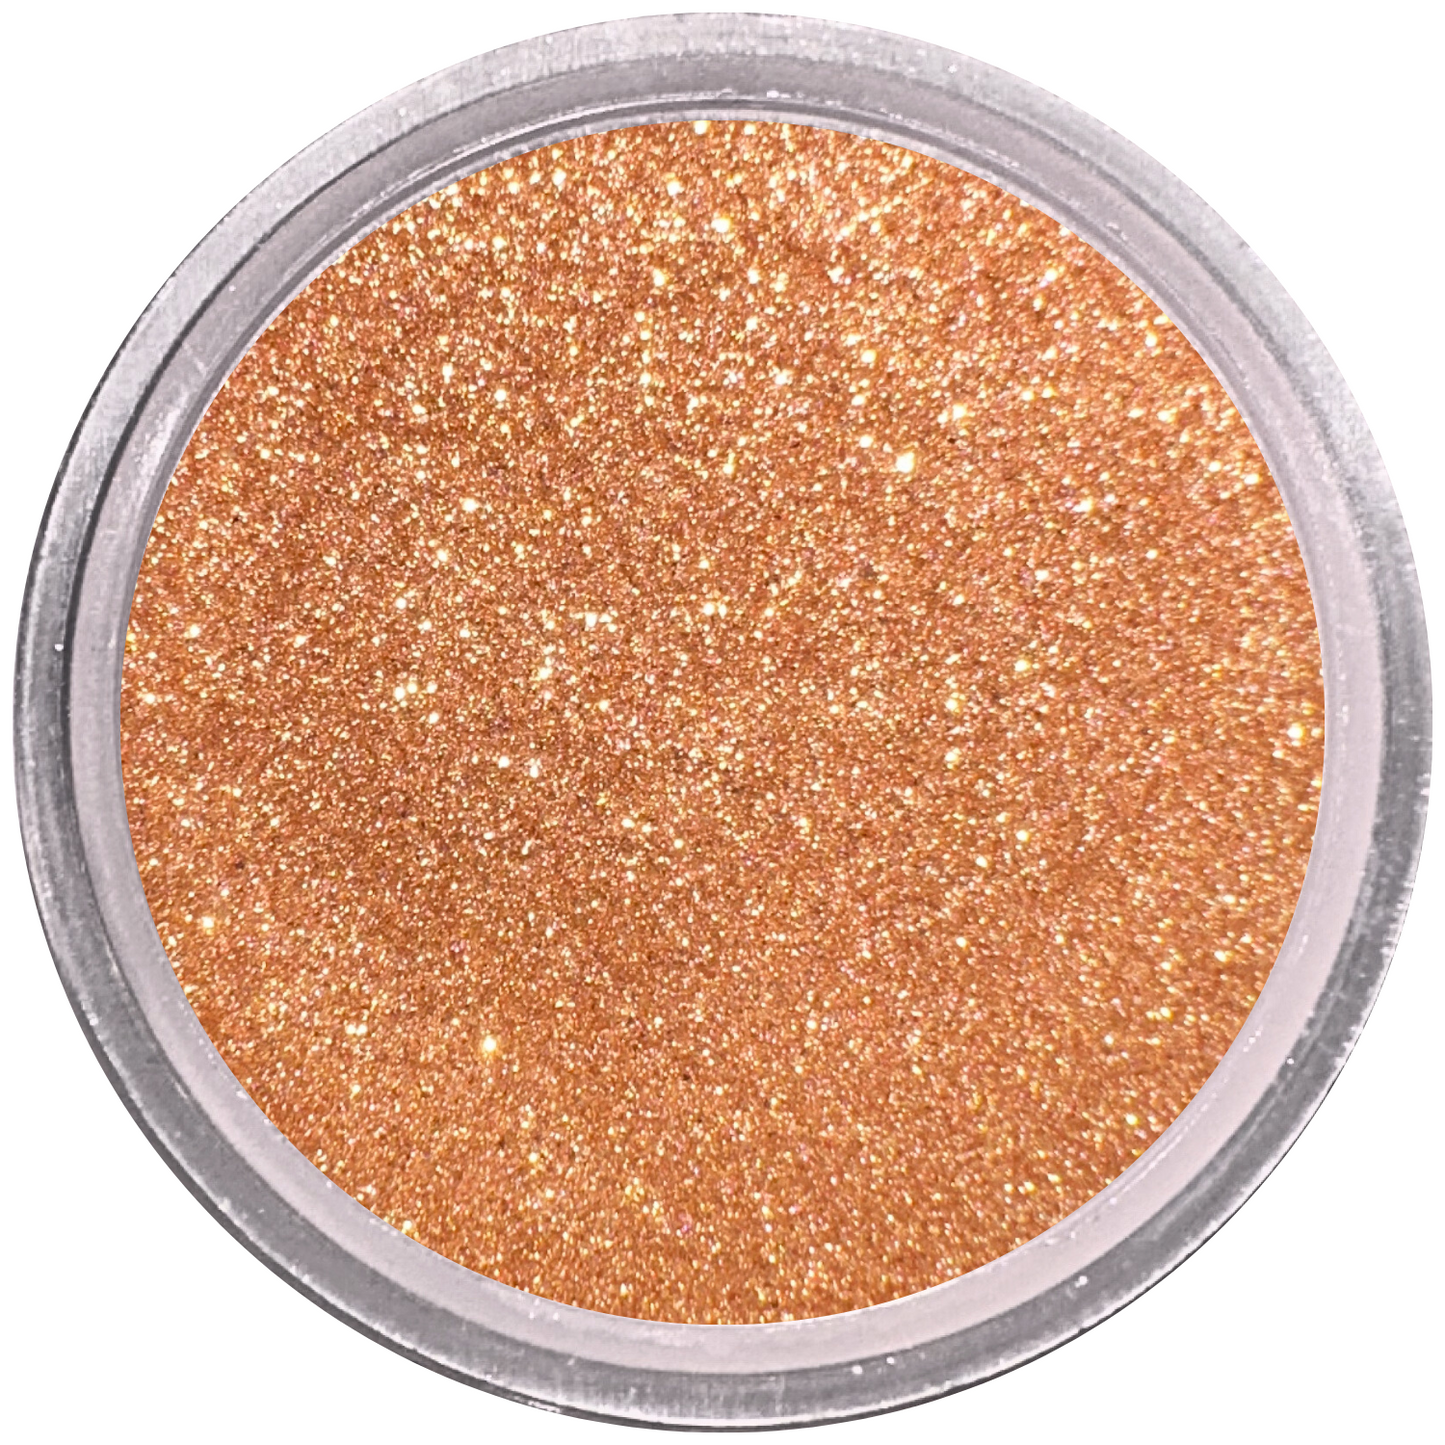 Bronze Star Loose Powder Mineral Eyeshadow Single 3g